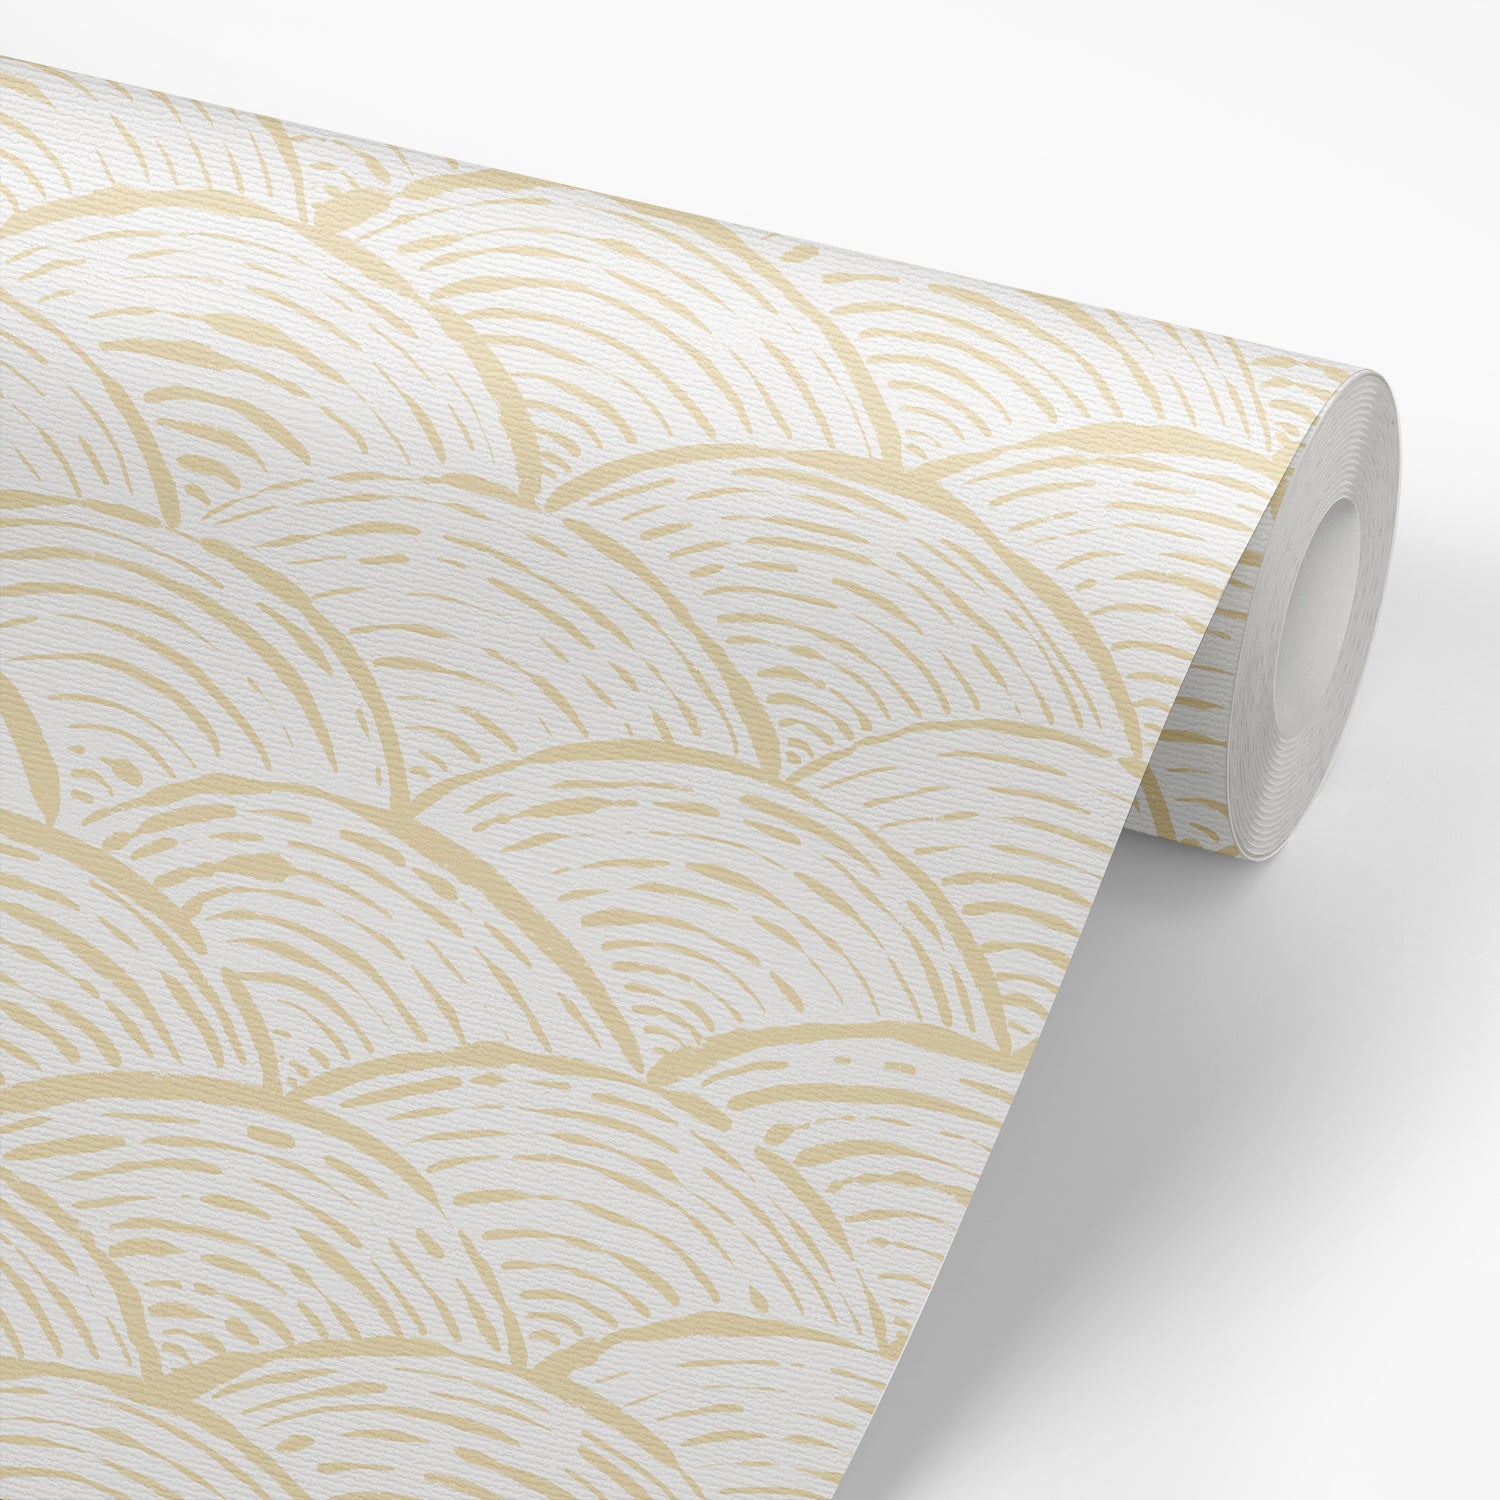 Scallops Wallpaper in Tan shown on a roll of wallpaper.